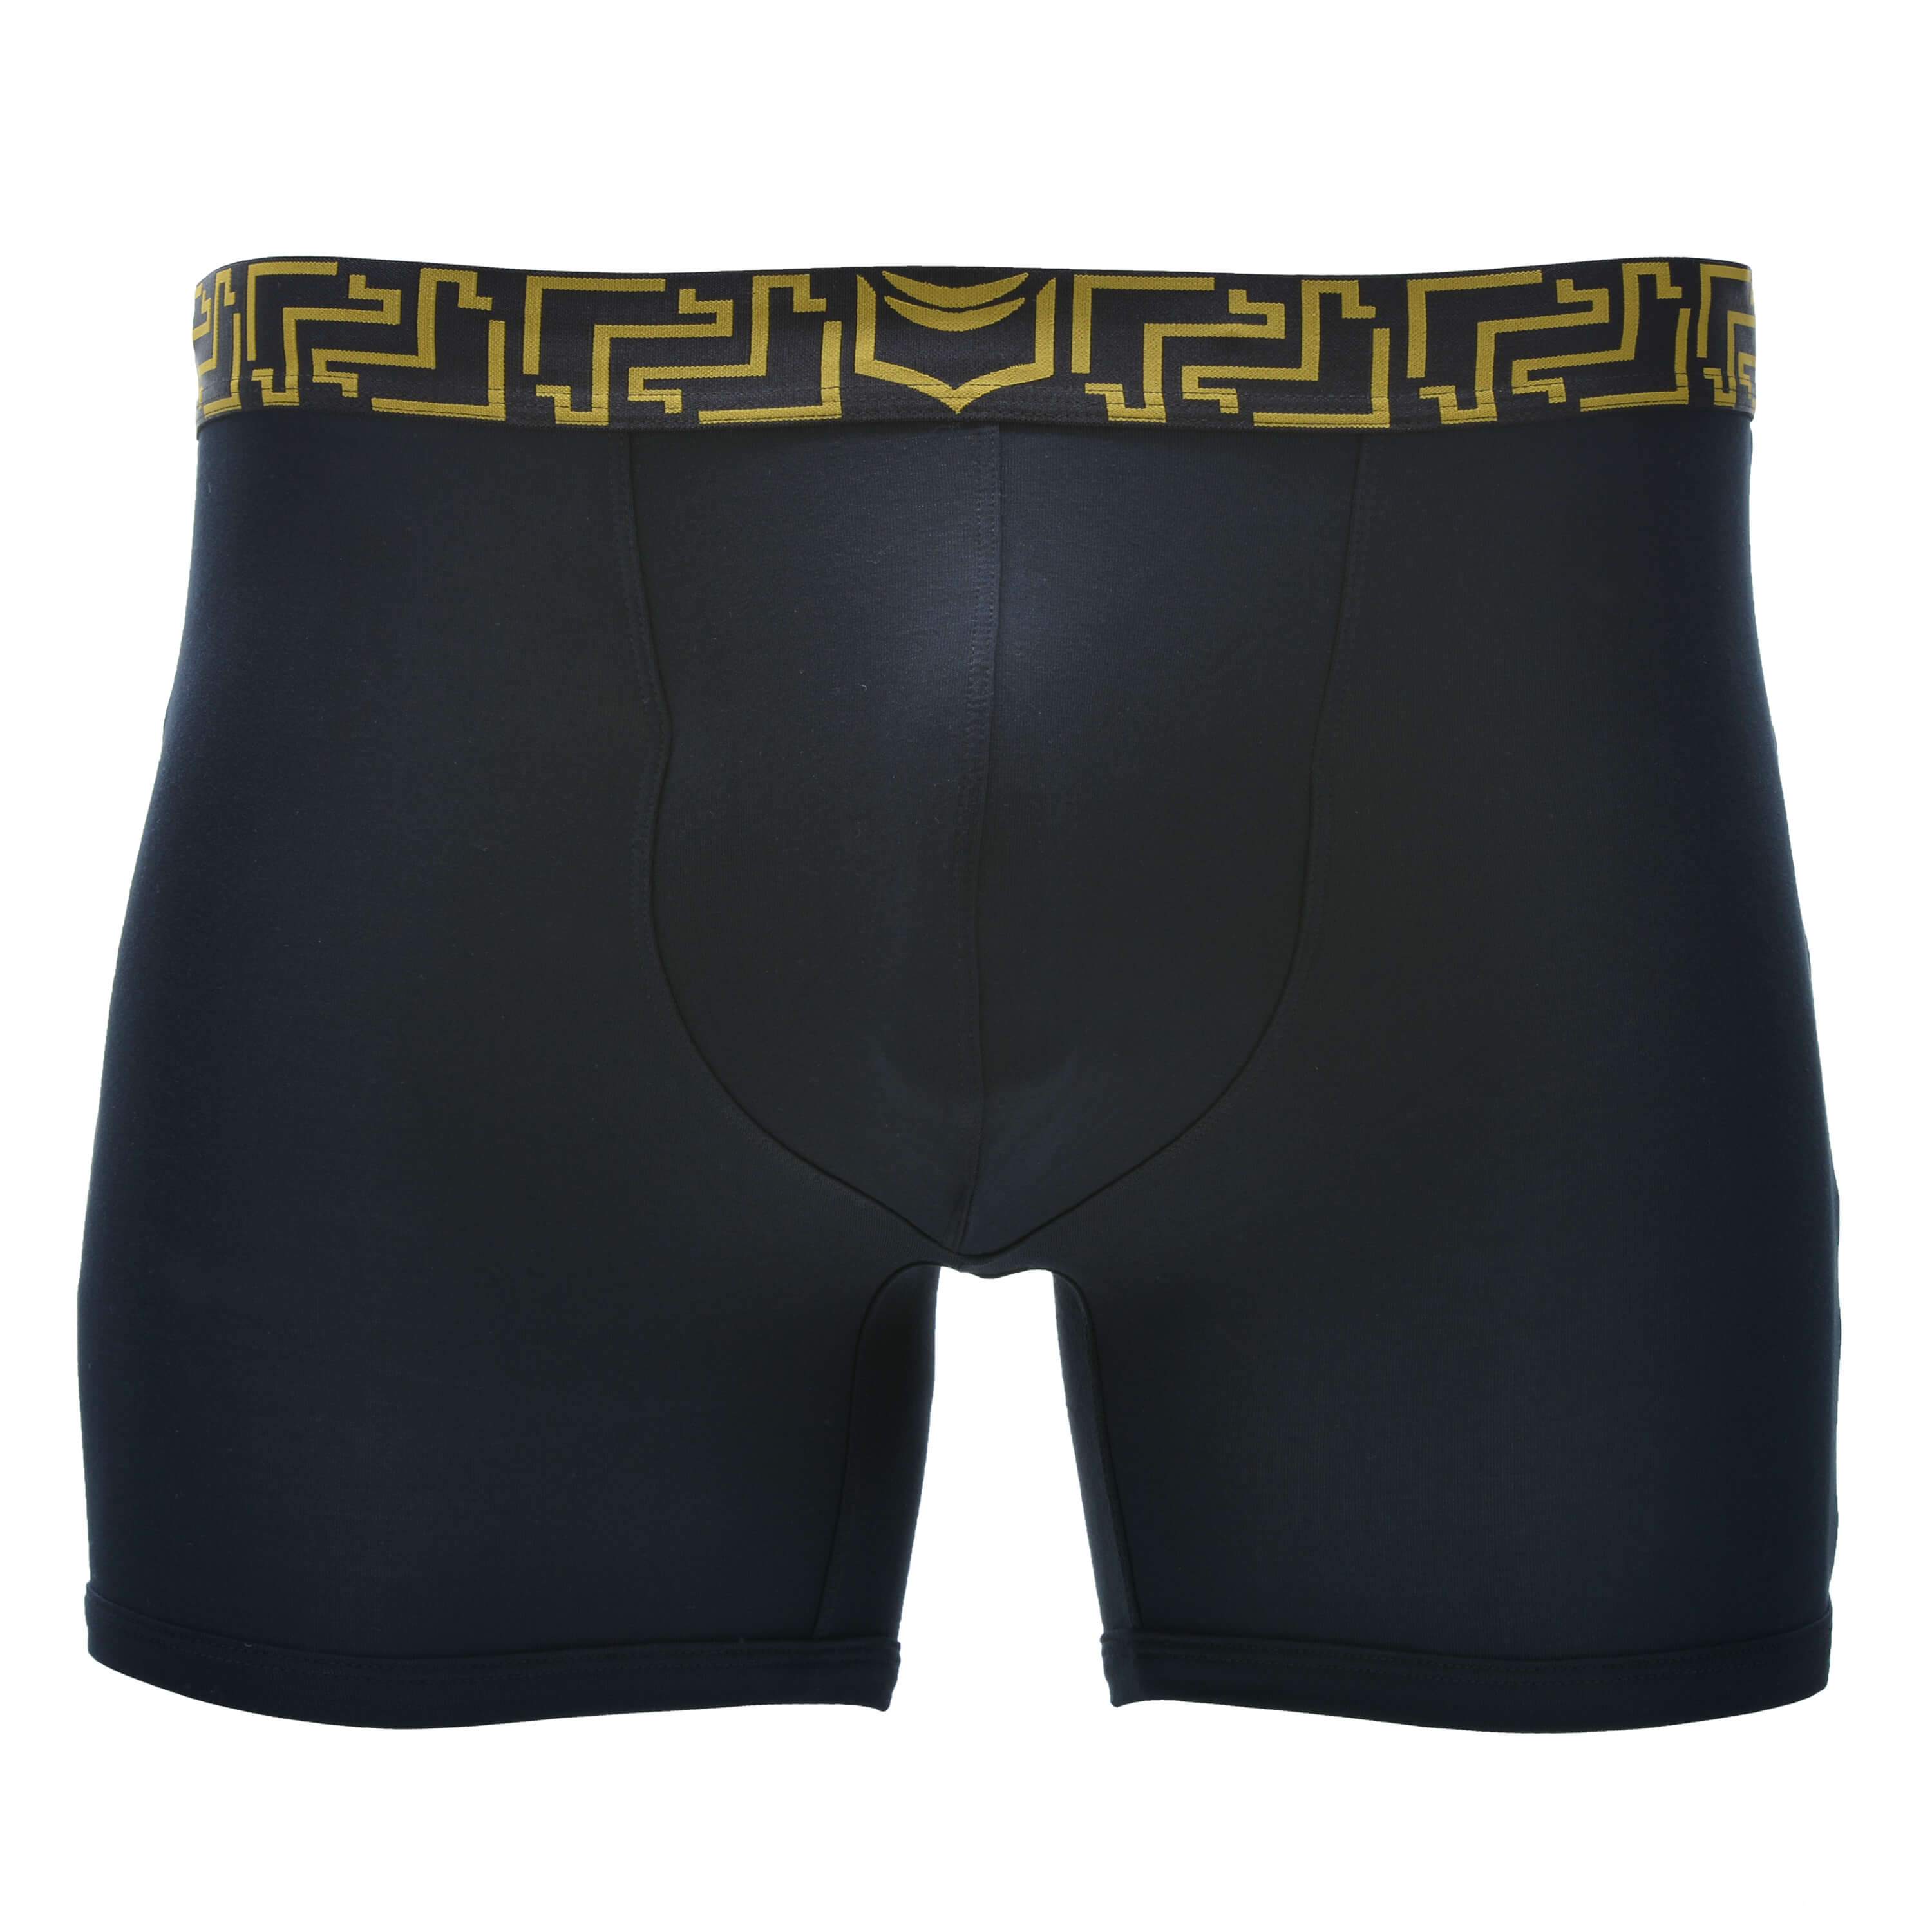 Sheath Underwear | Men's Underwear 3.0 | Zen Pouch Black - SHEATH ...